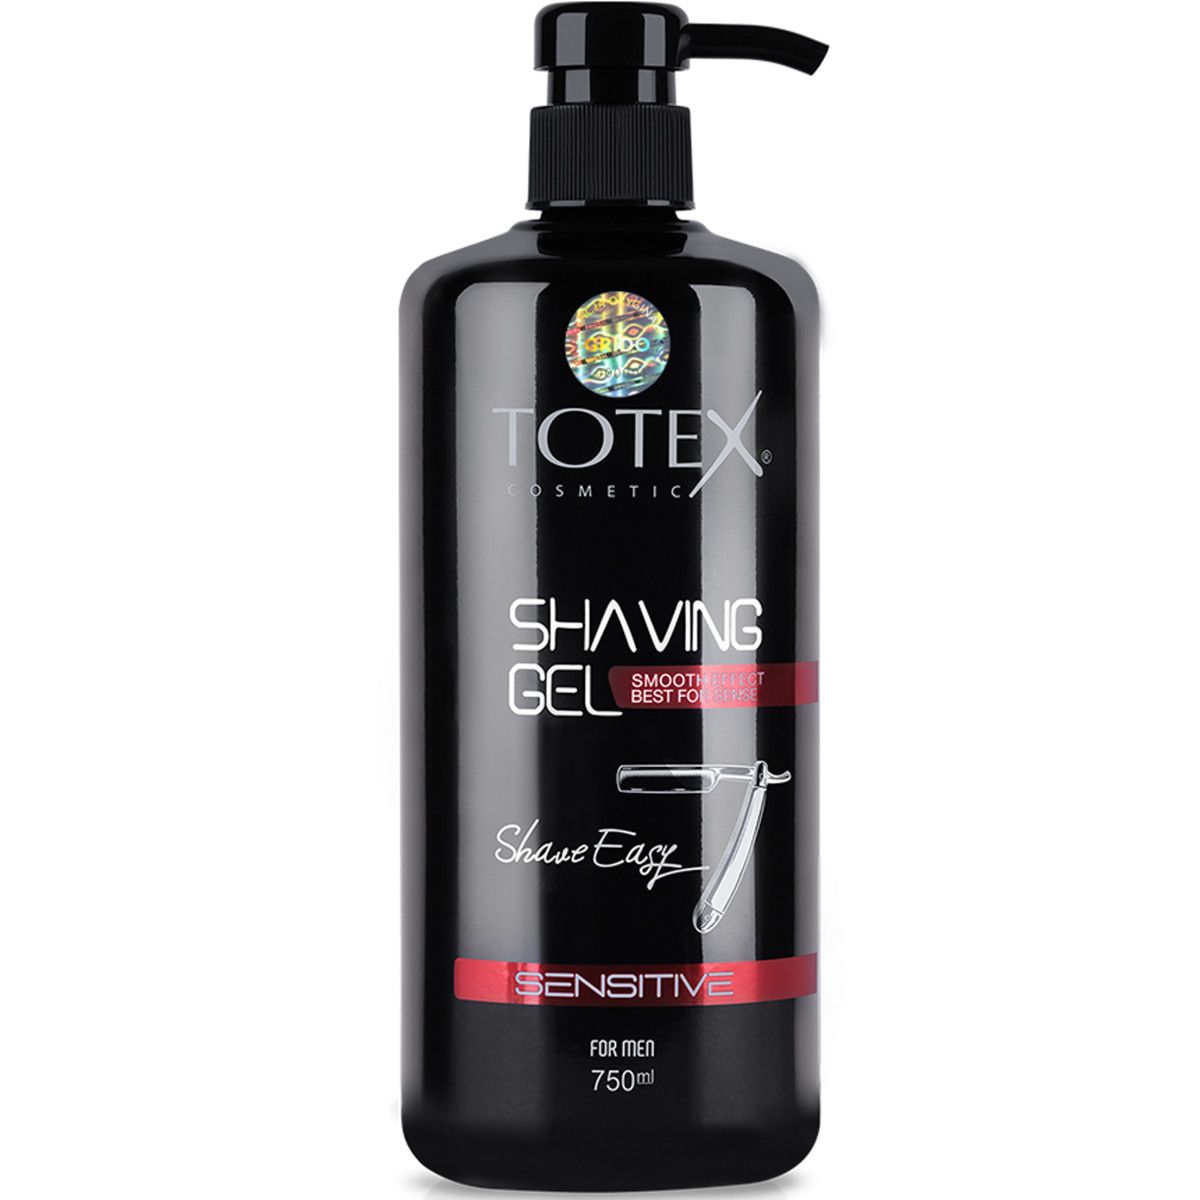 Totex Shaving Gel Sensitive For Men - żel do golenia dla skóry wrażliwej, 750ml